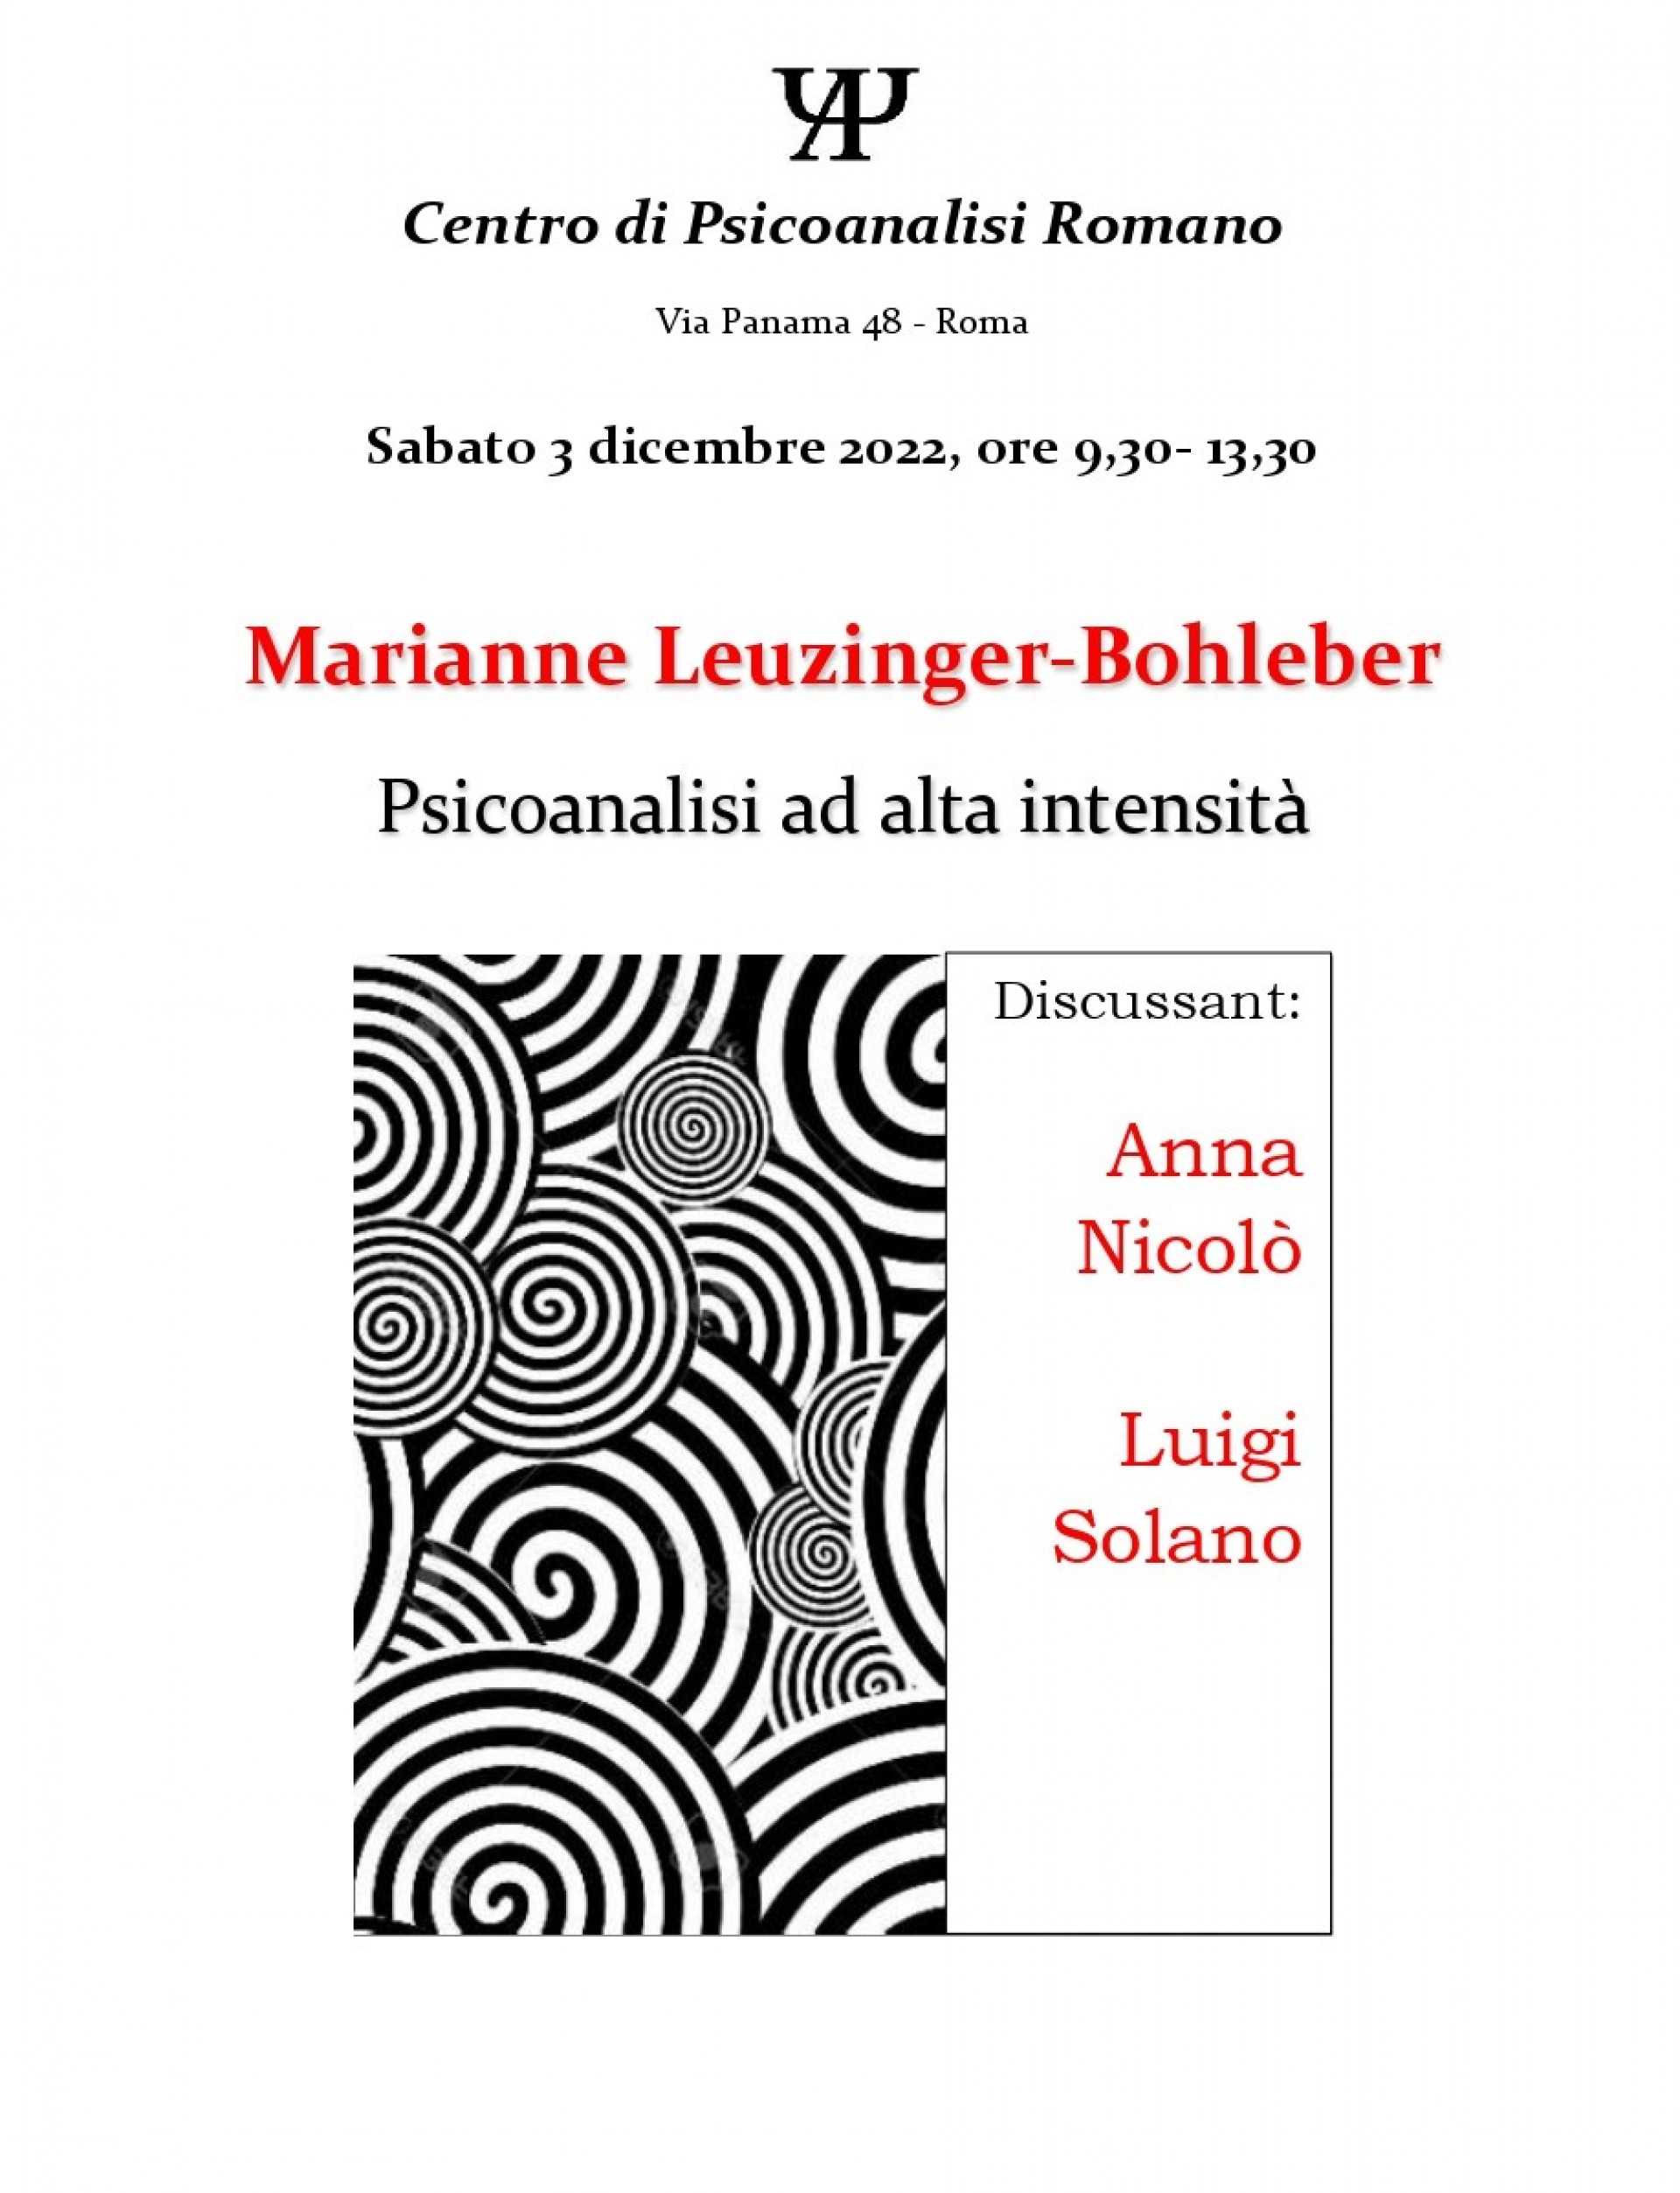 “Marianne Leuzinger-Bohleber. Psicoanalisi ad alta intensità”.